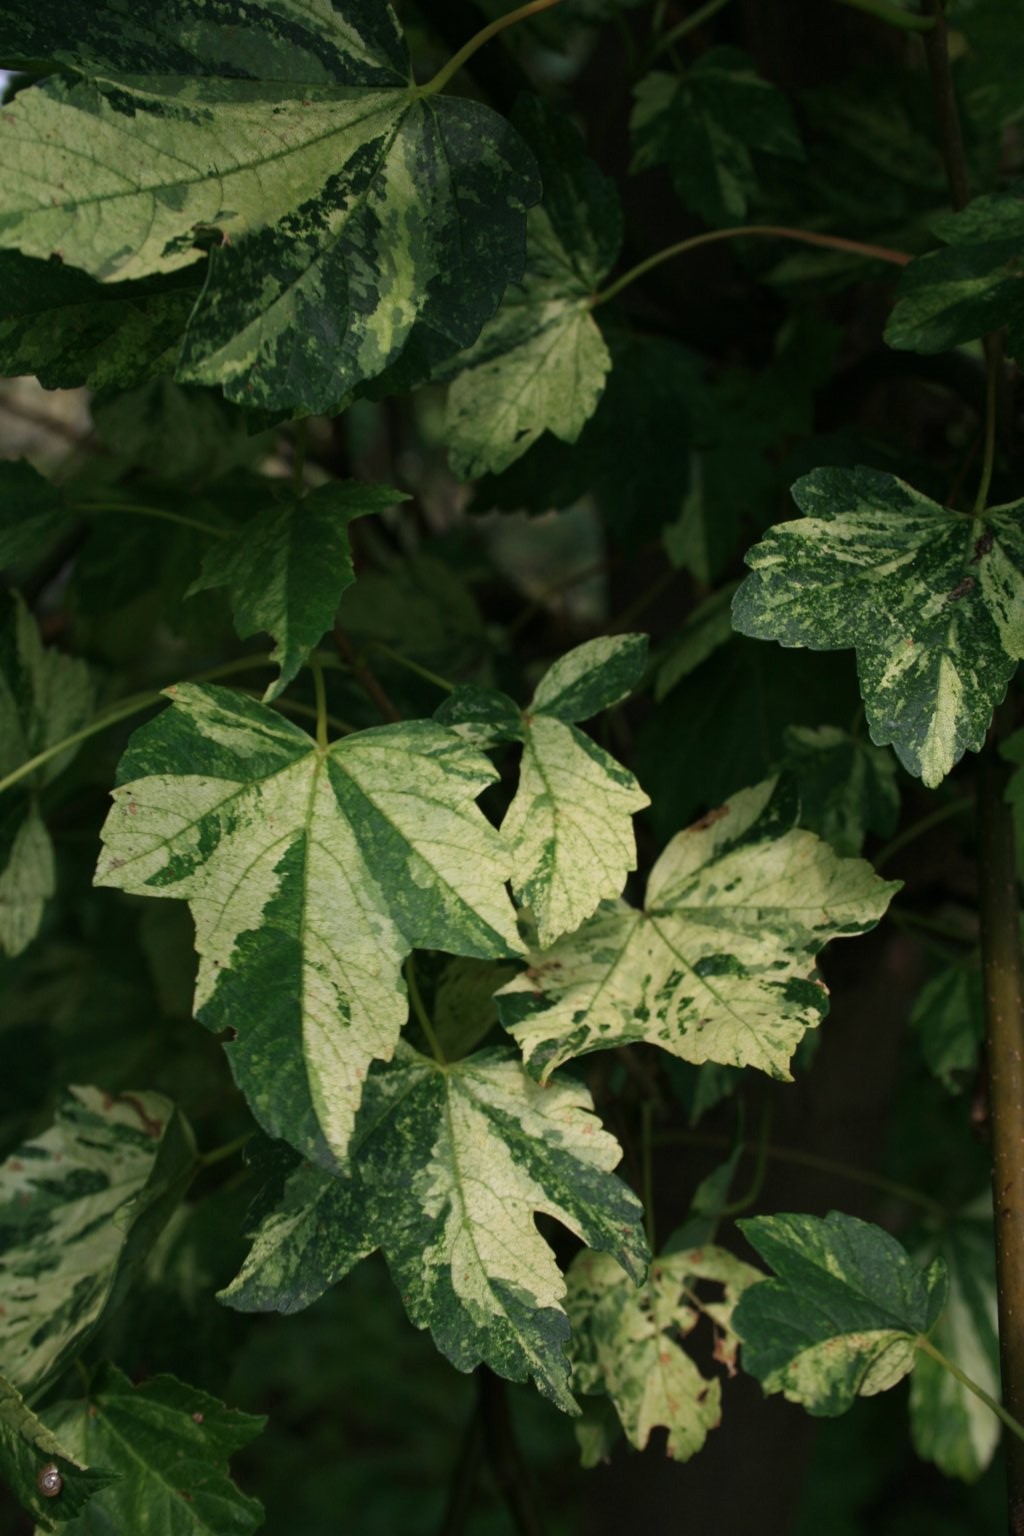 Klon jawor "Leopoldii" / Acer pseudoplatanus "Leopoldii"